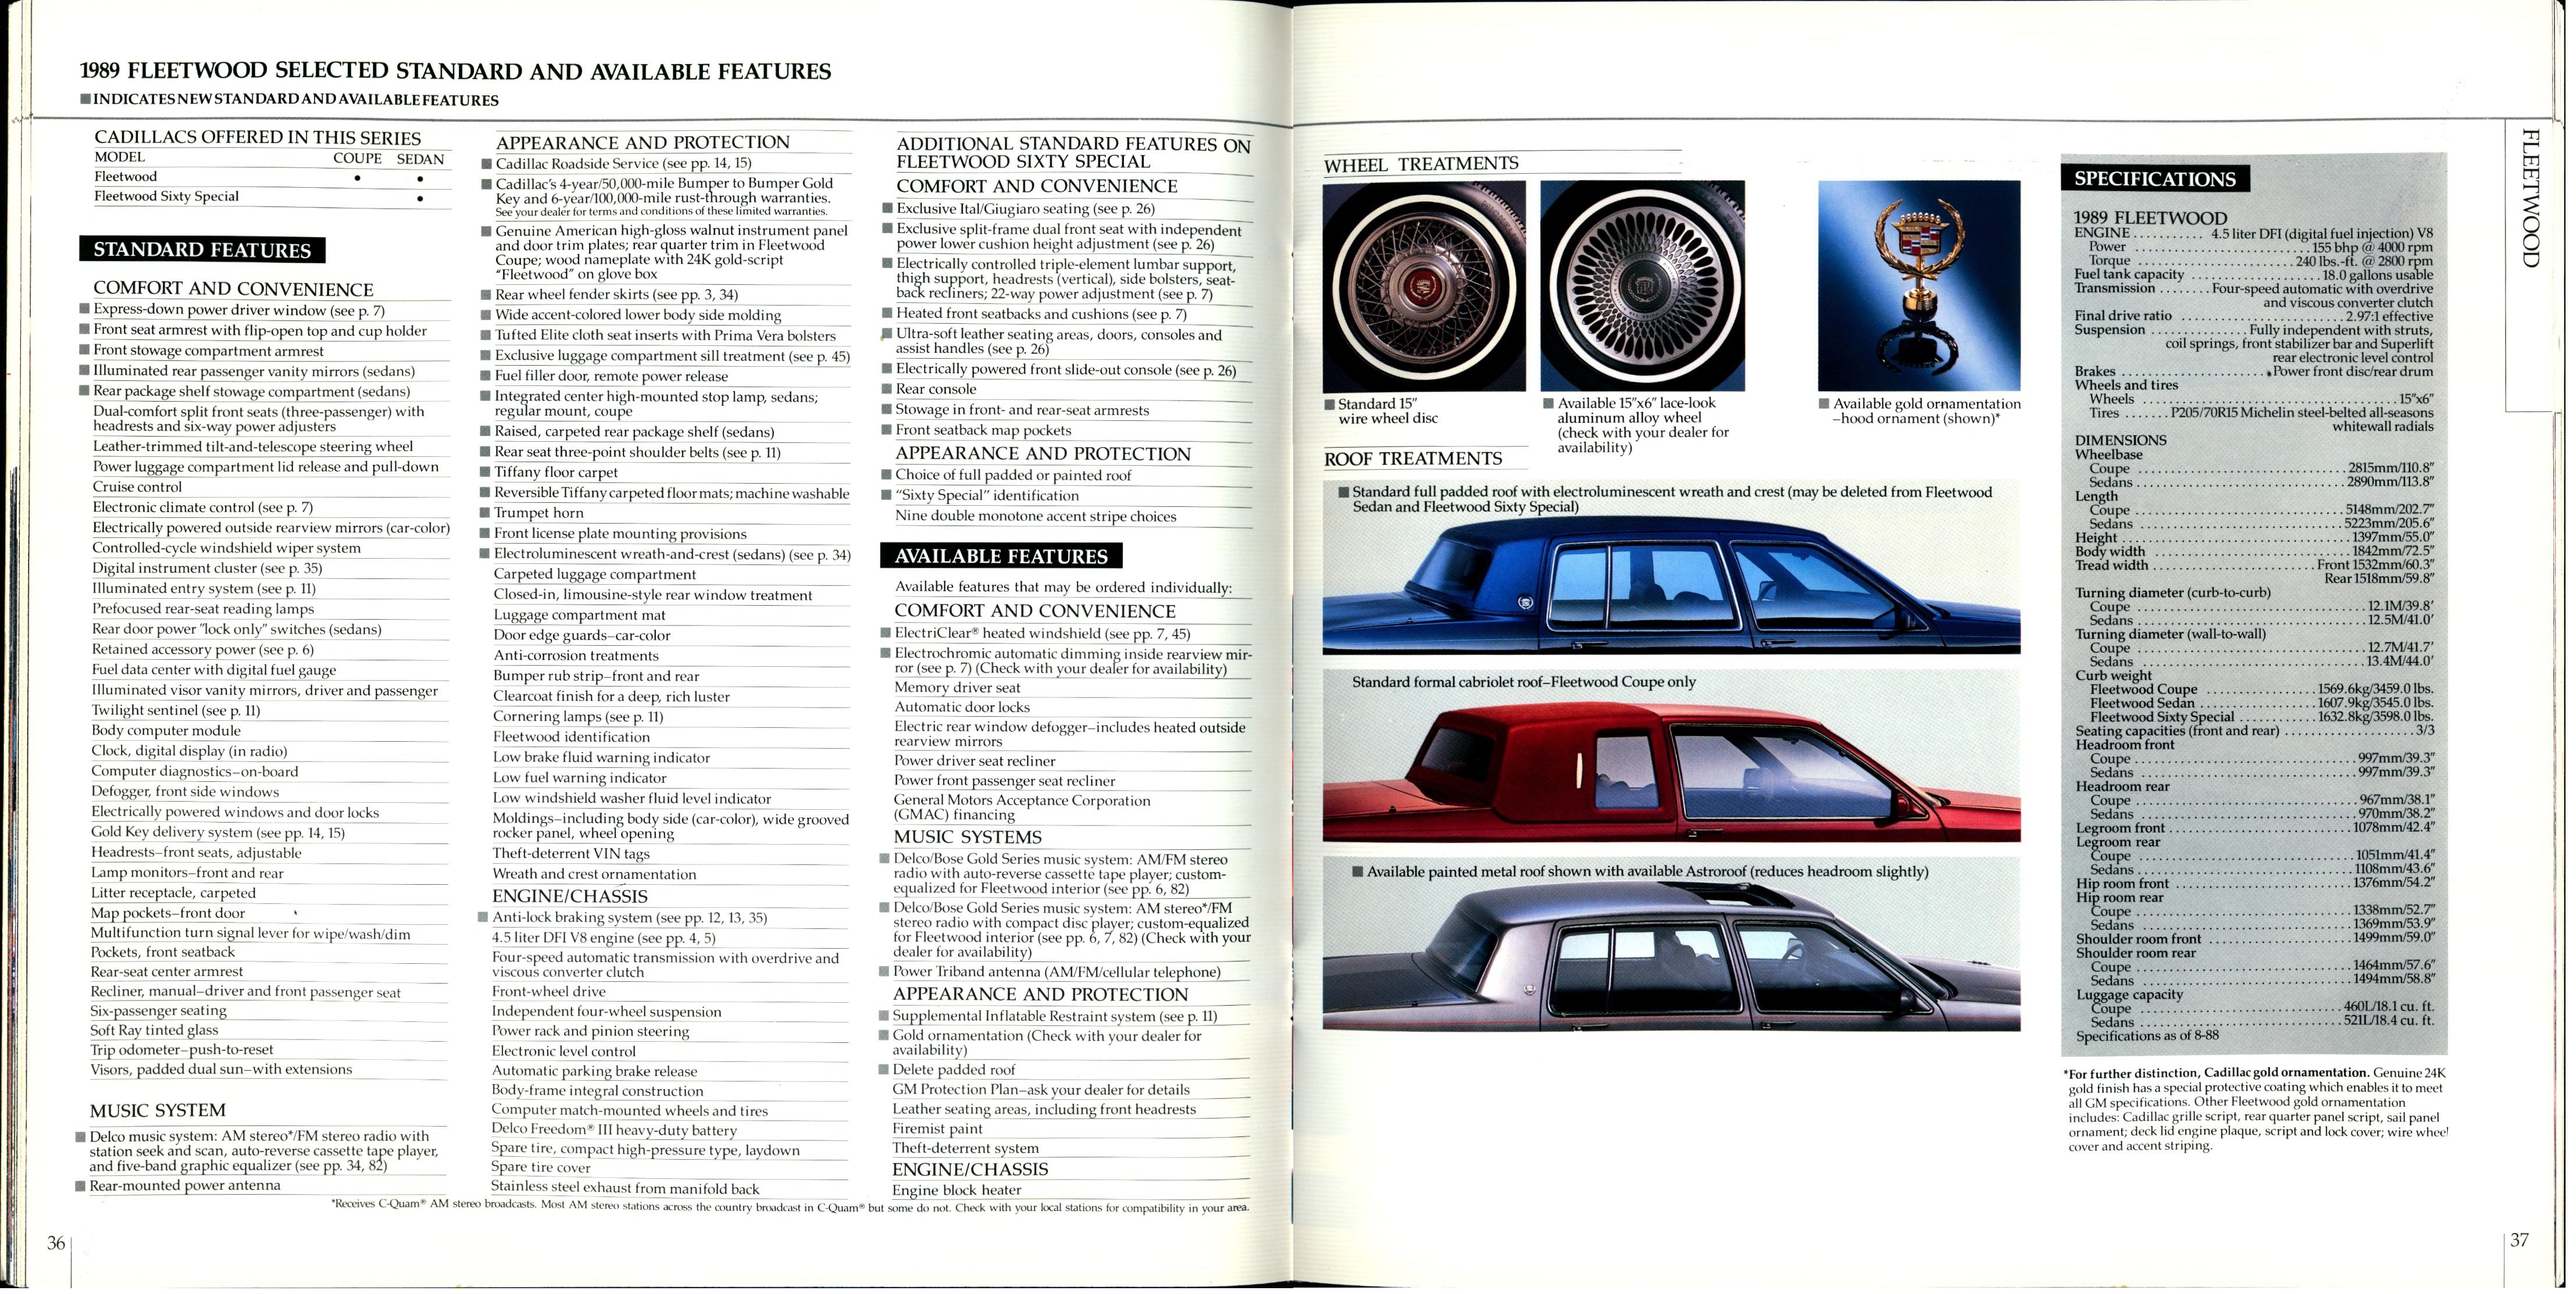 1989 Cadillac Full Line Prestige Brochure 36-37